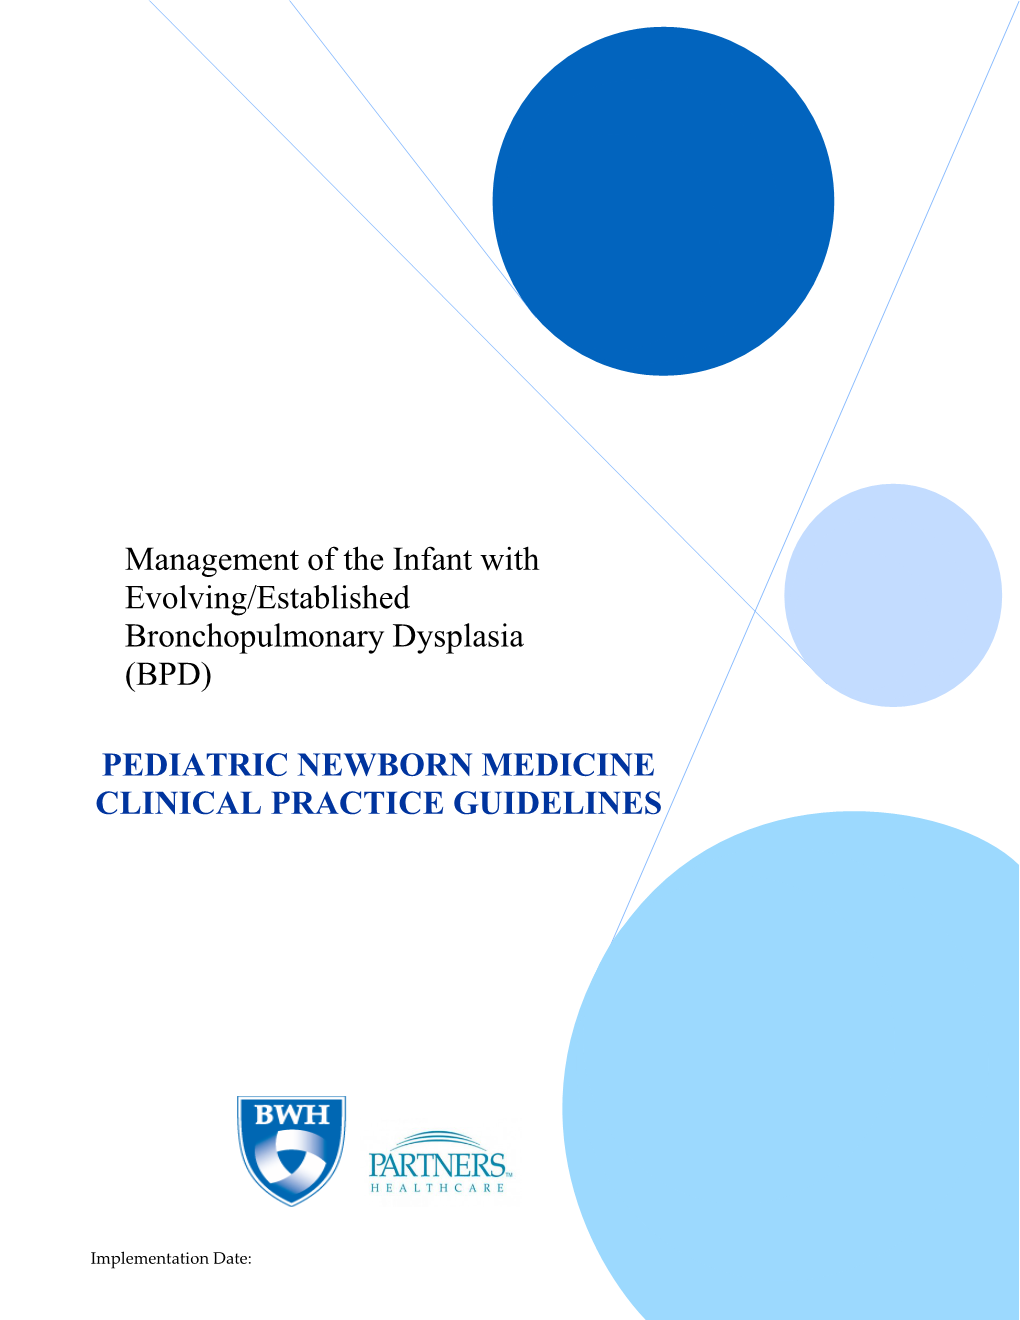 Management of the Infant with Evolving/Established Bronchopulmonary Dysplasia (BPD)